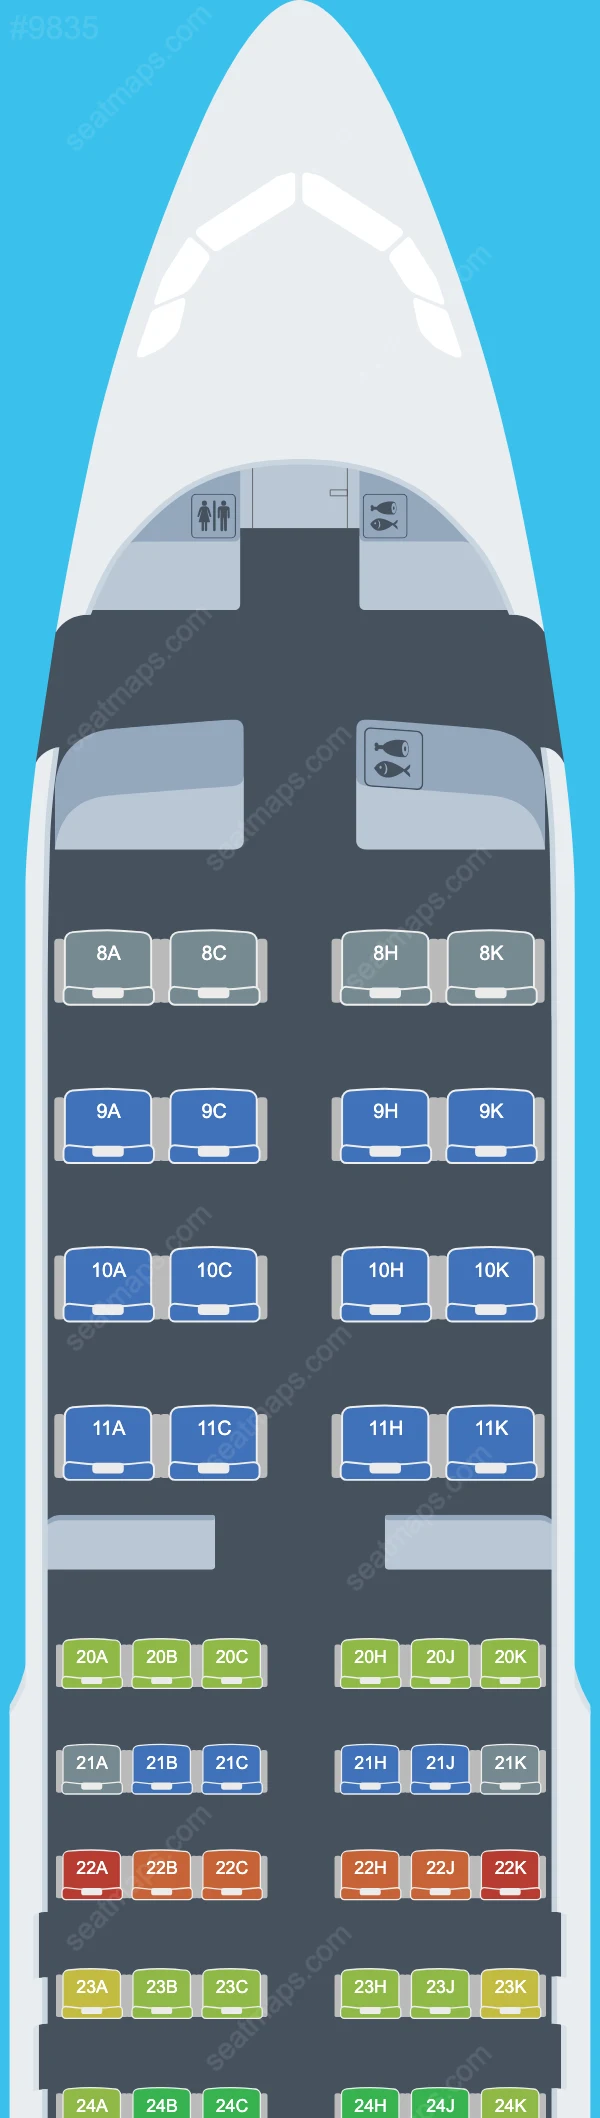 Egyptair Airbus A320-200neo seatmap mobile preview